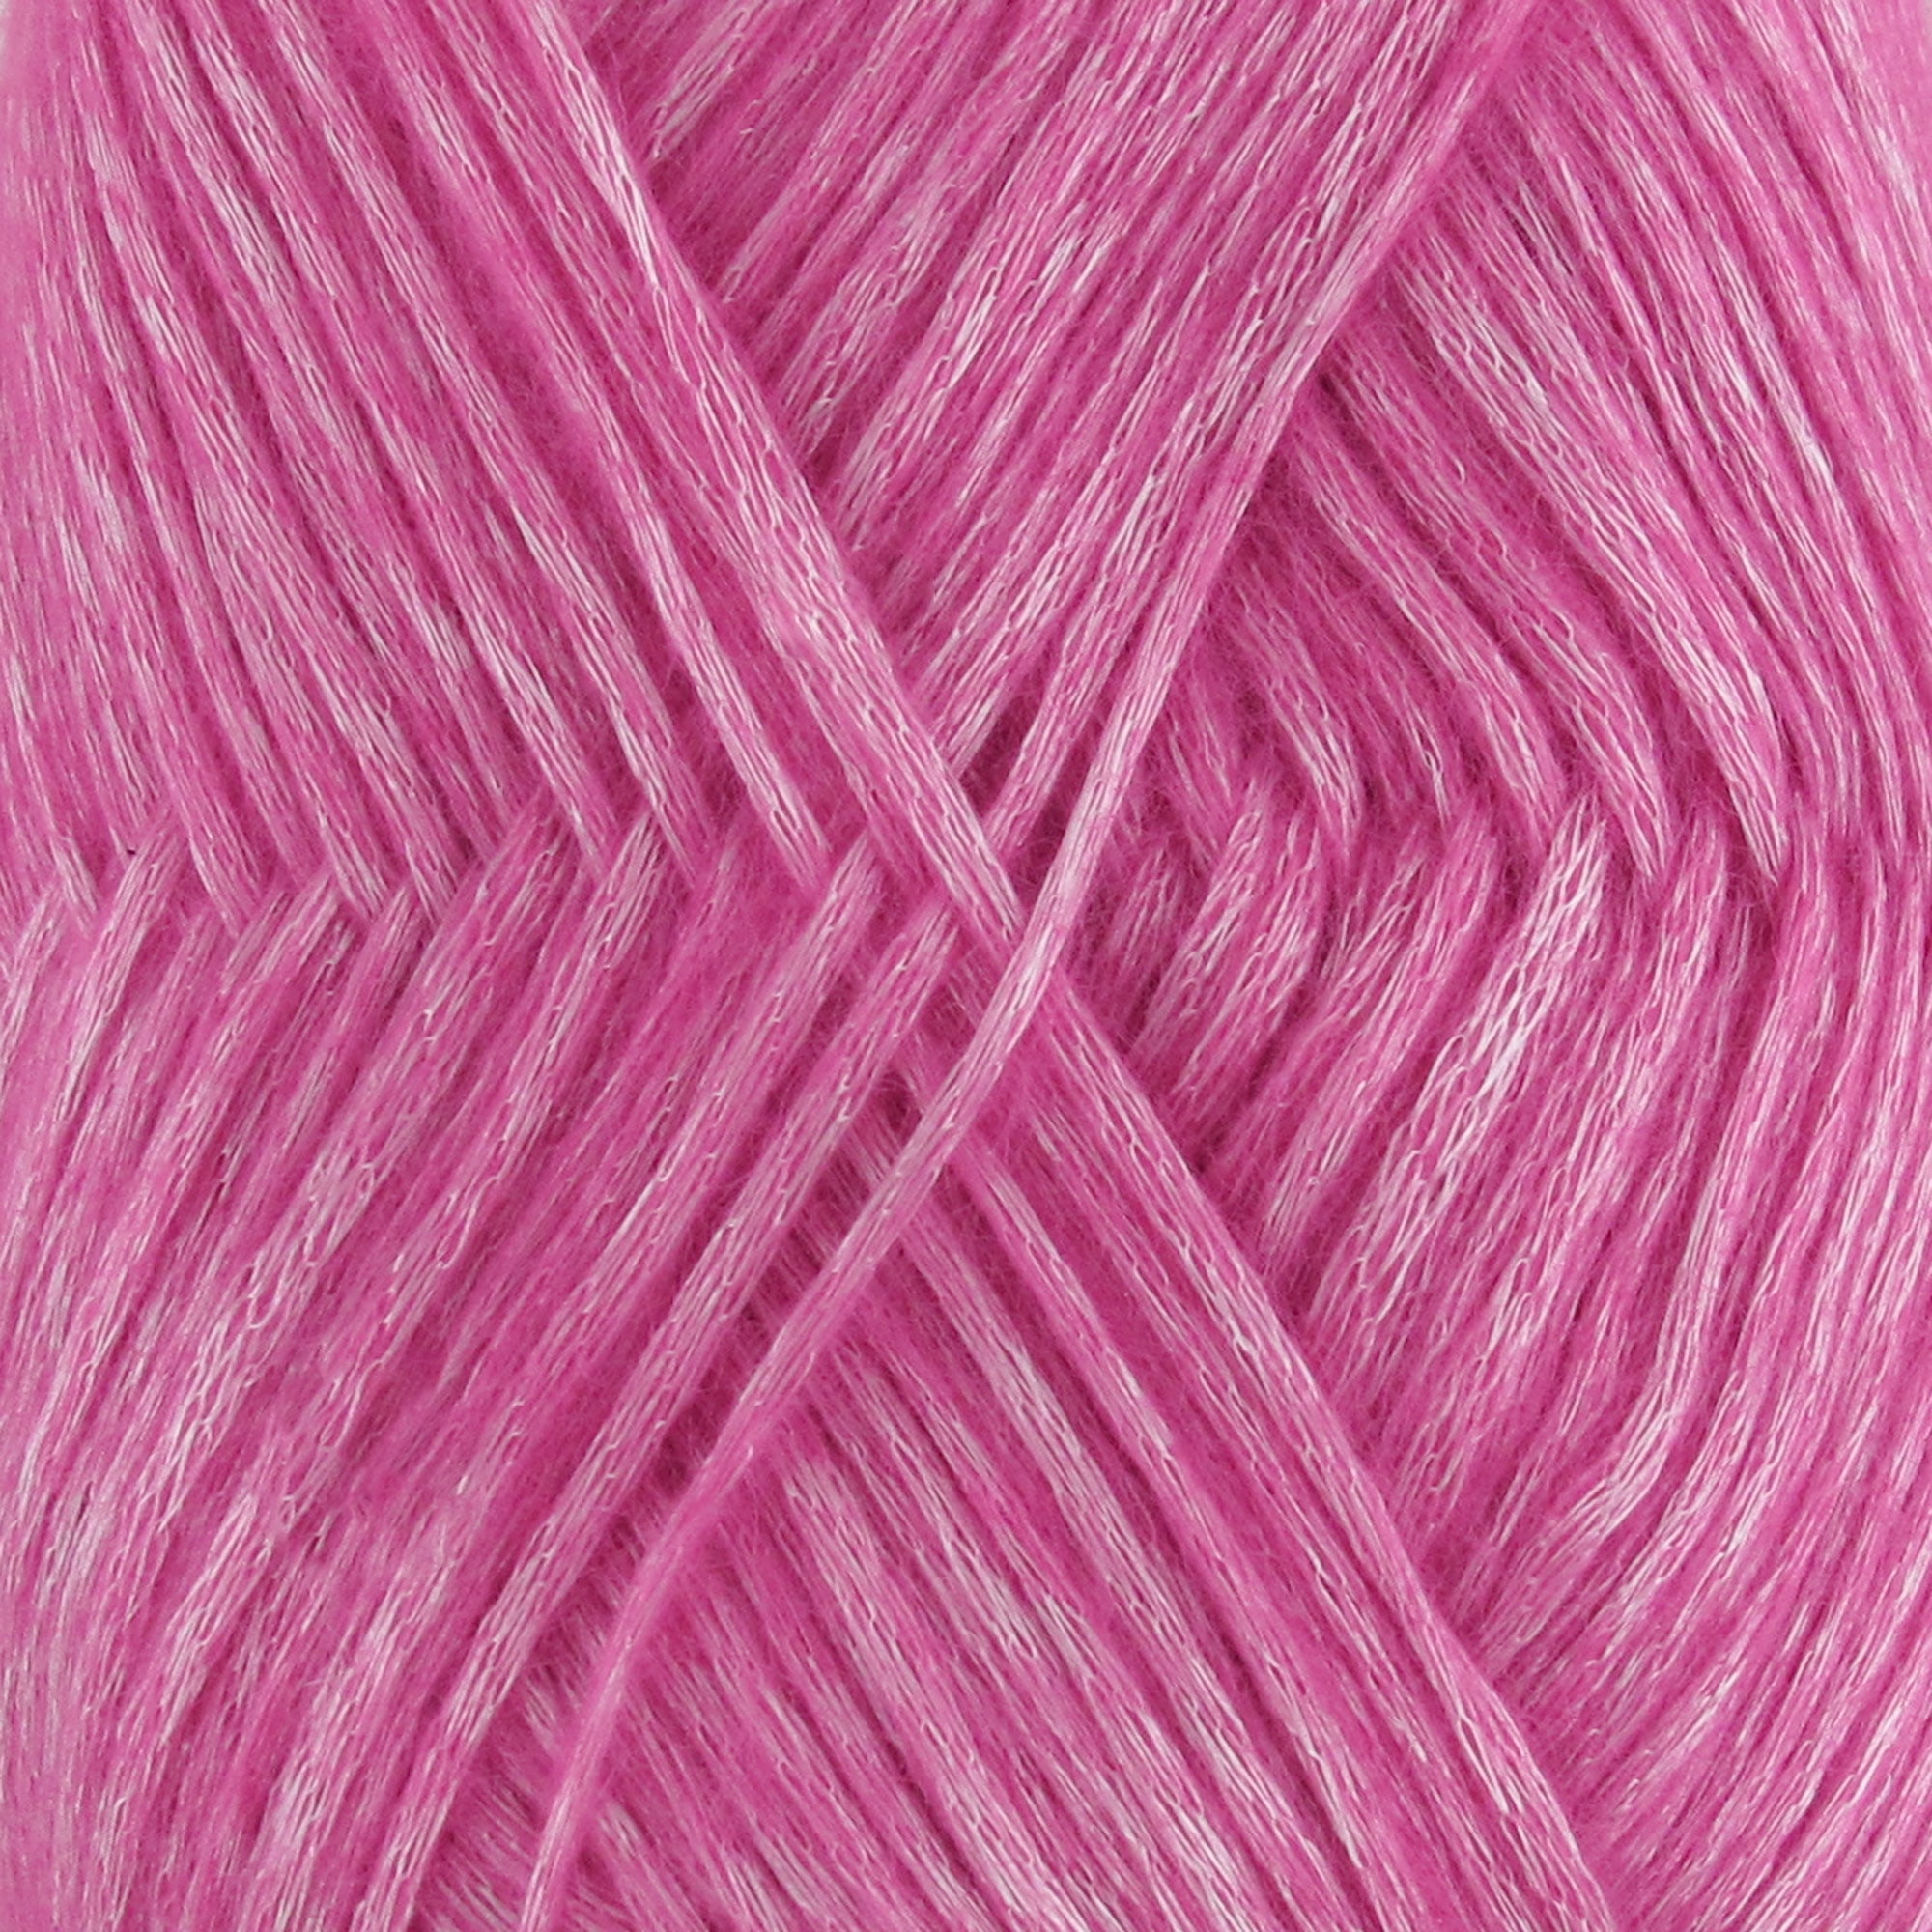 Breeze Yarn - Fine Light DK Weight Yarn for Socks, Sweaters, Baby Items - 50g/Skein - Ballerina Pink - 4 skeins - Walmart.com